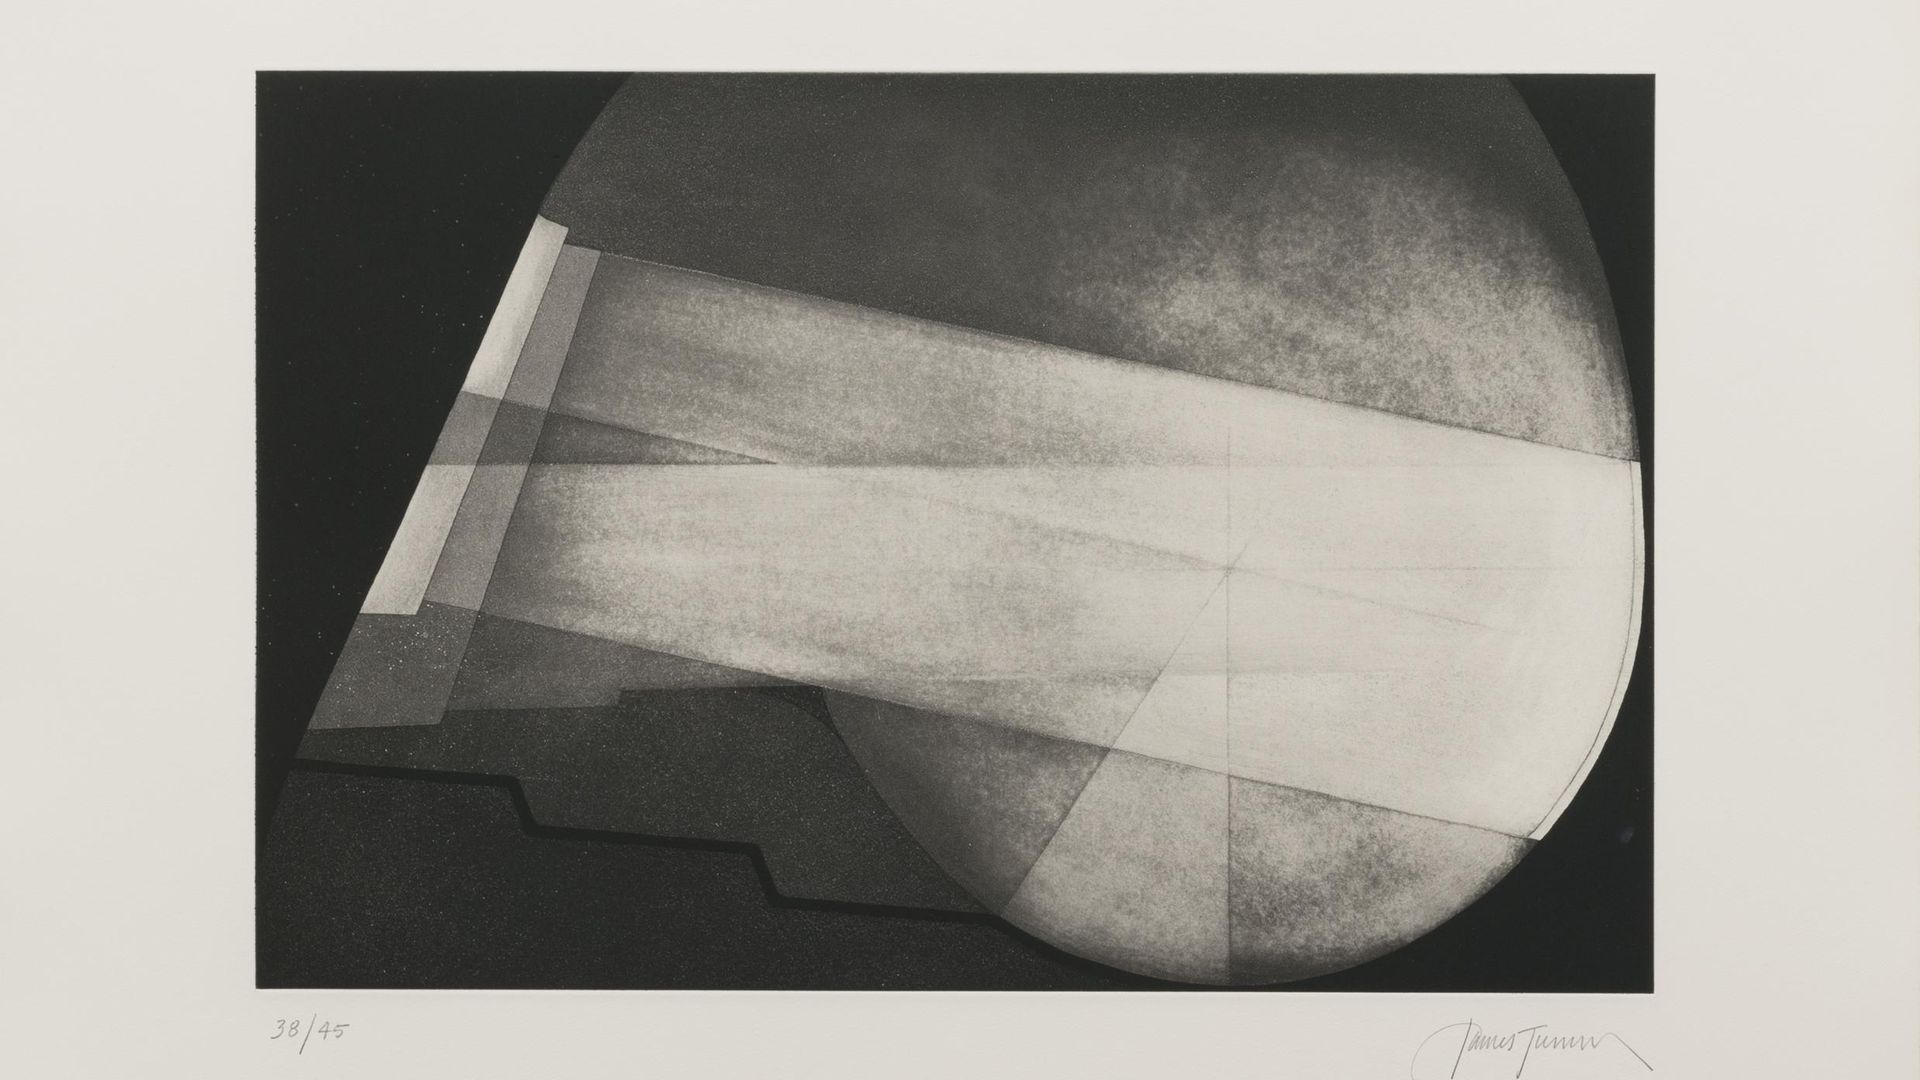 James Turrell, Deep Sky, 1984, part 6 of 7, Courtesy Häussler Contemporary, Munich